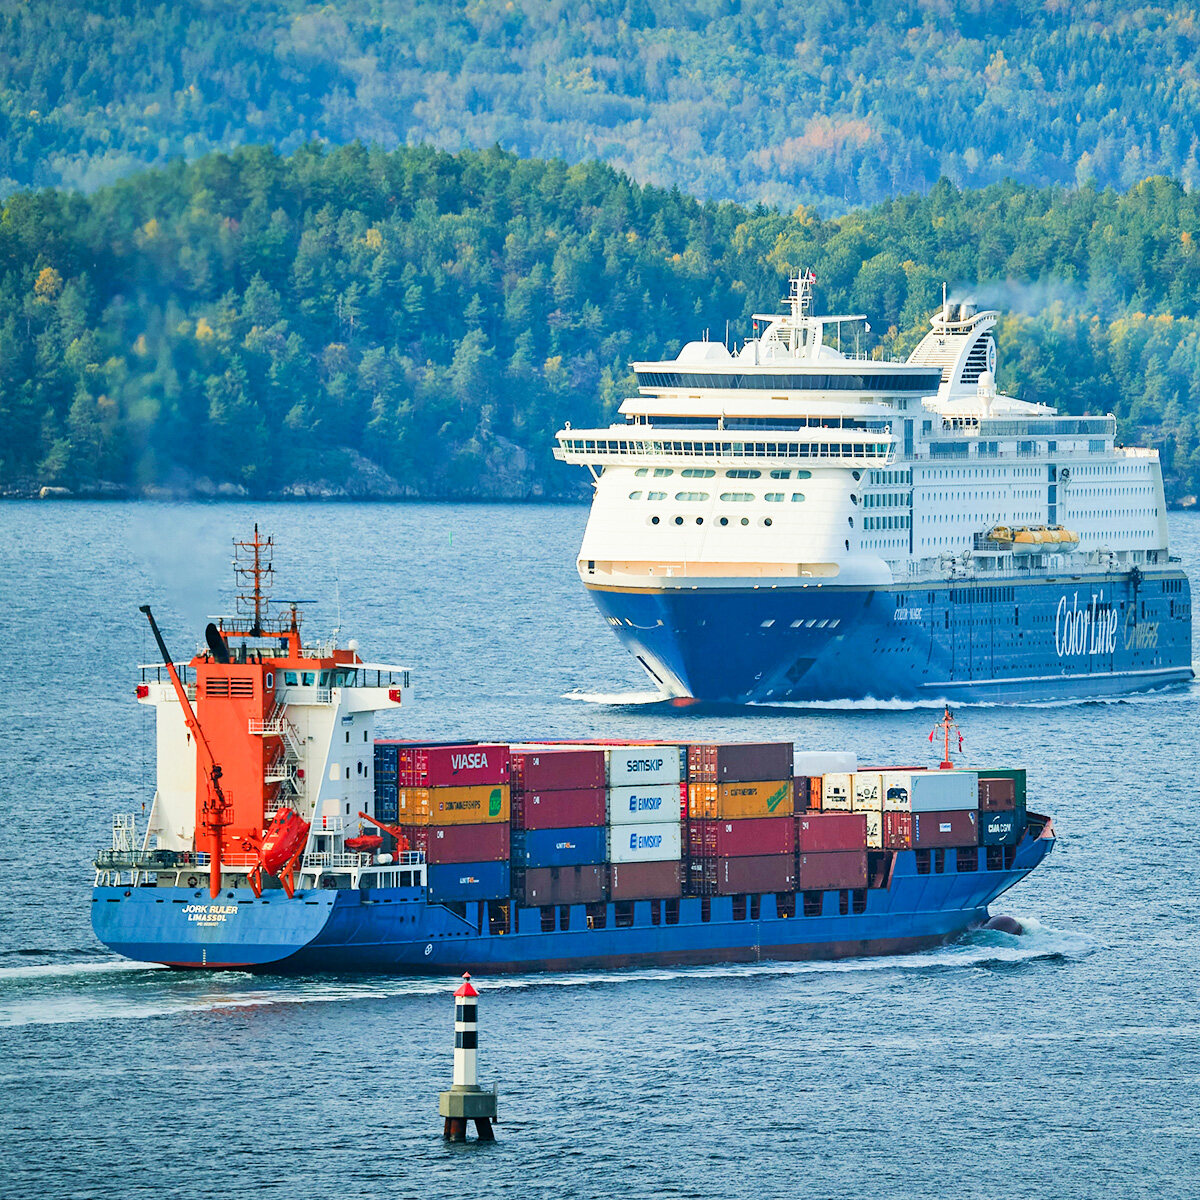 transport of dangerous goods by sea